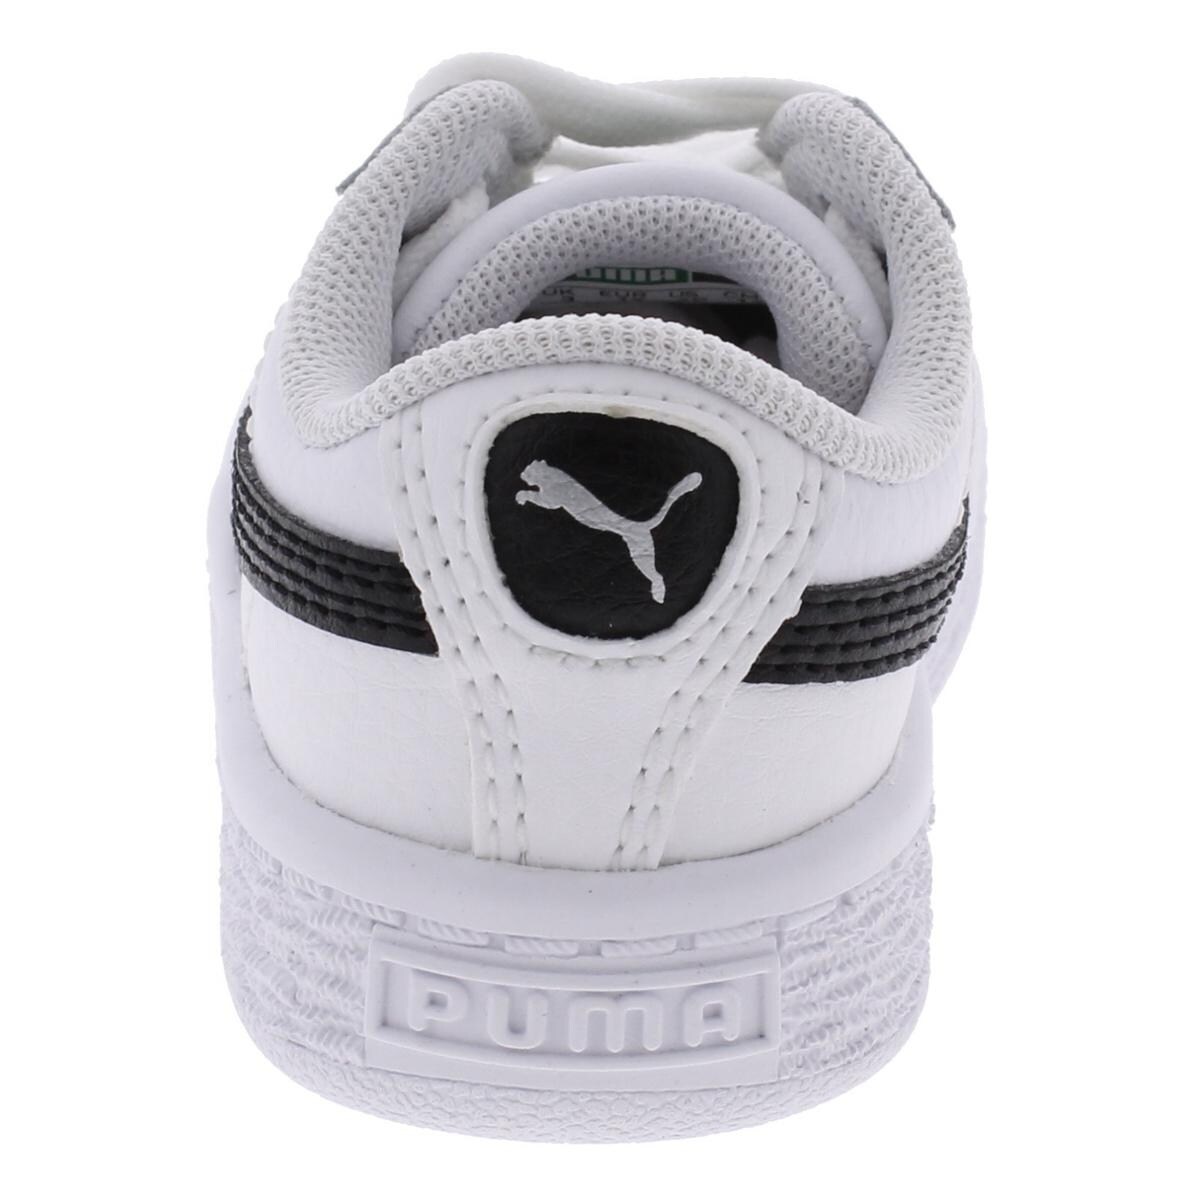 puma basket classic fit